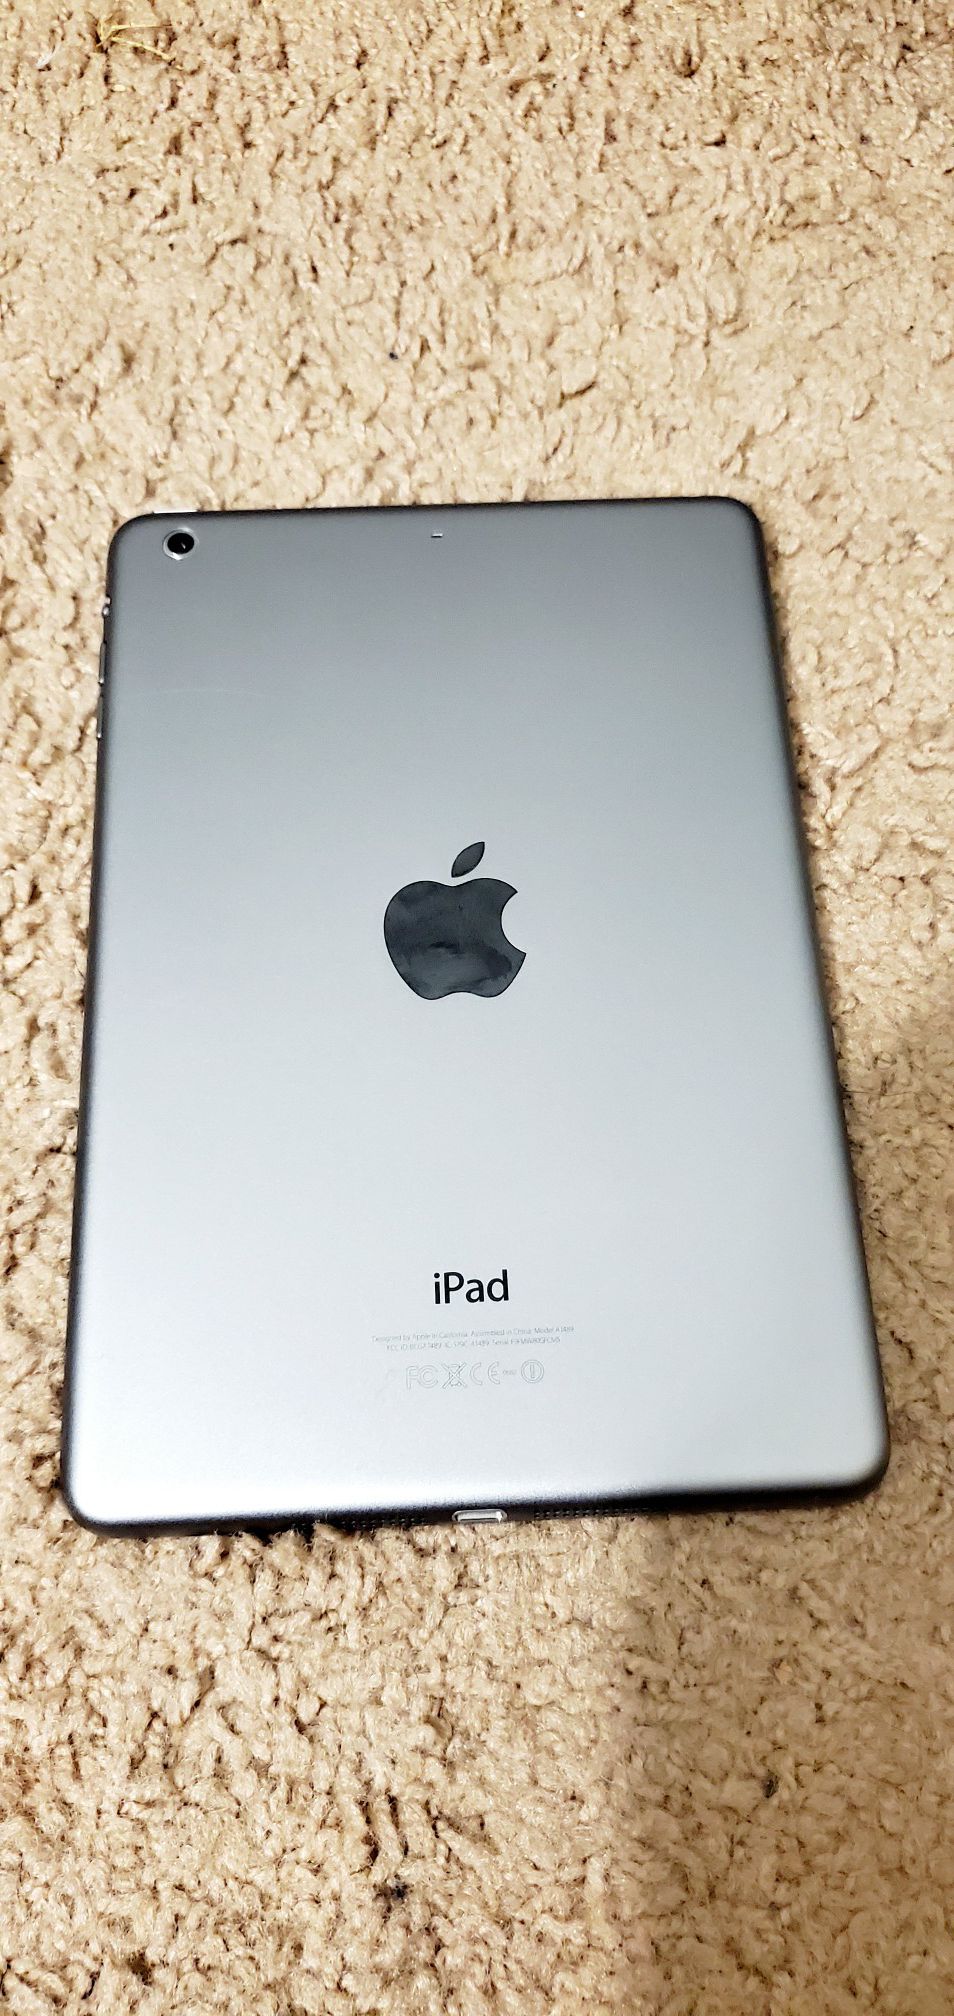 iPad mini 2 iCloud unlocked